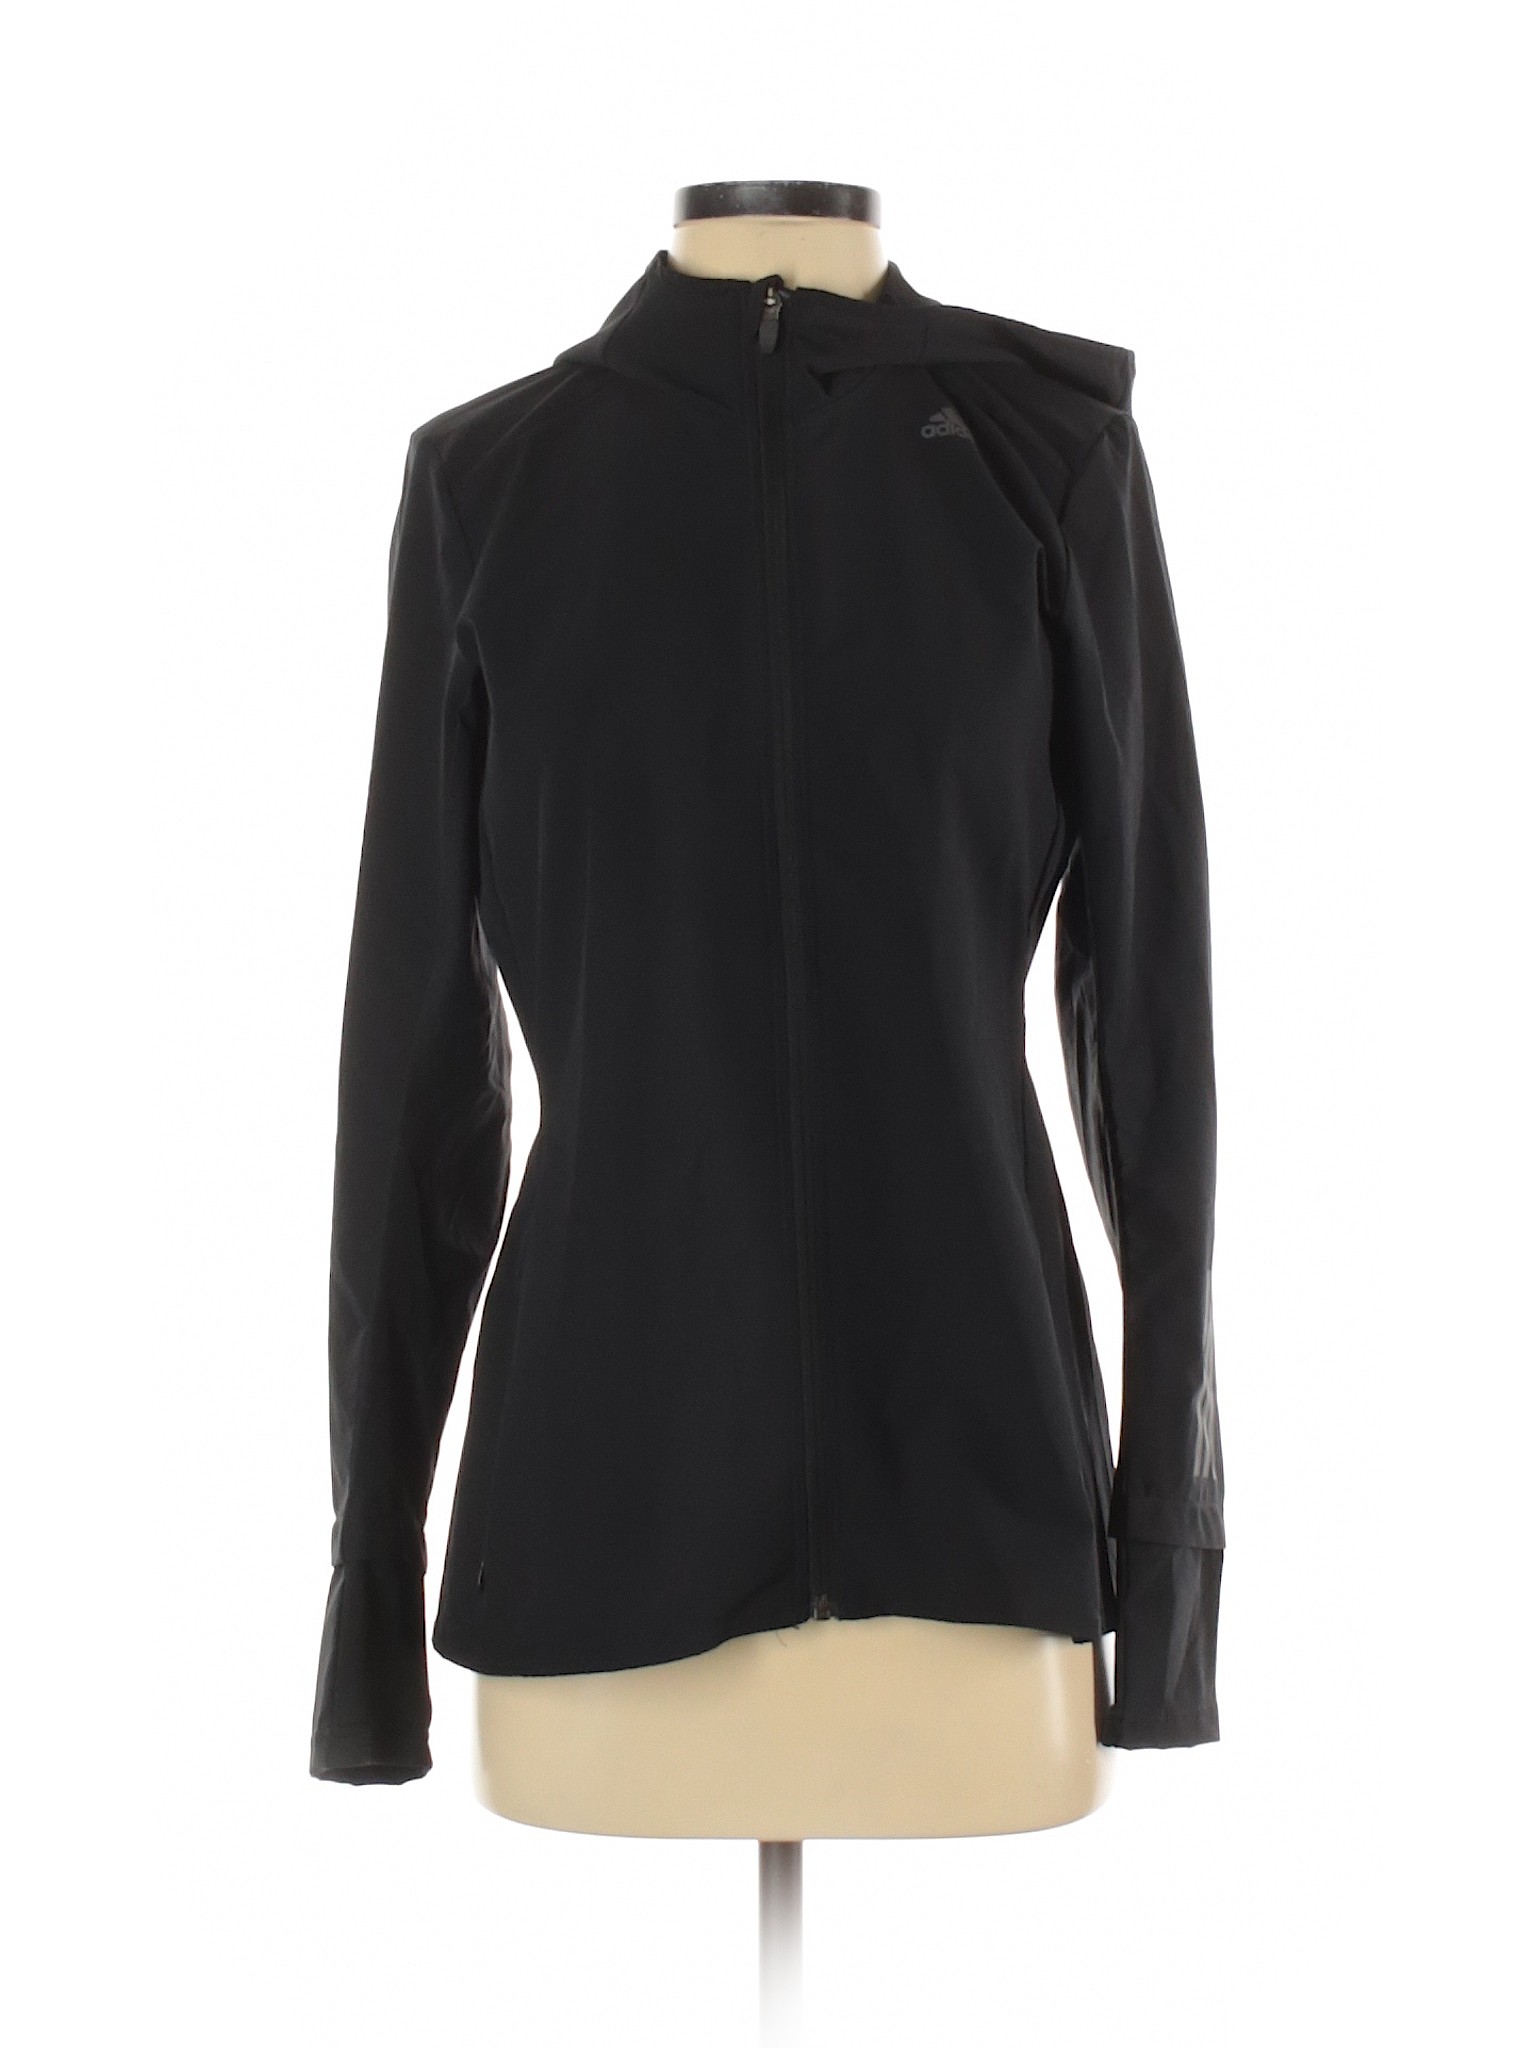 Adidas Women Black Jacket S | eBay